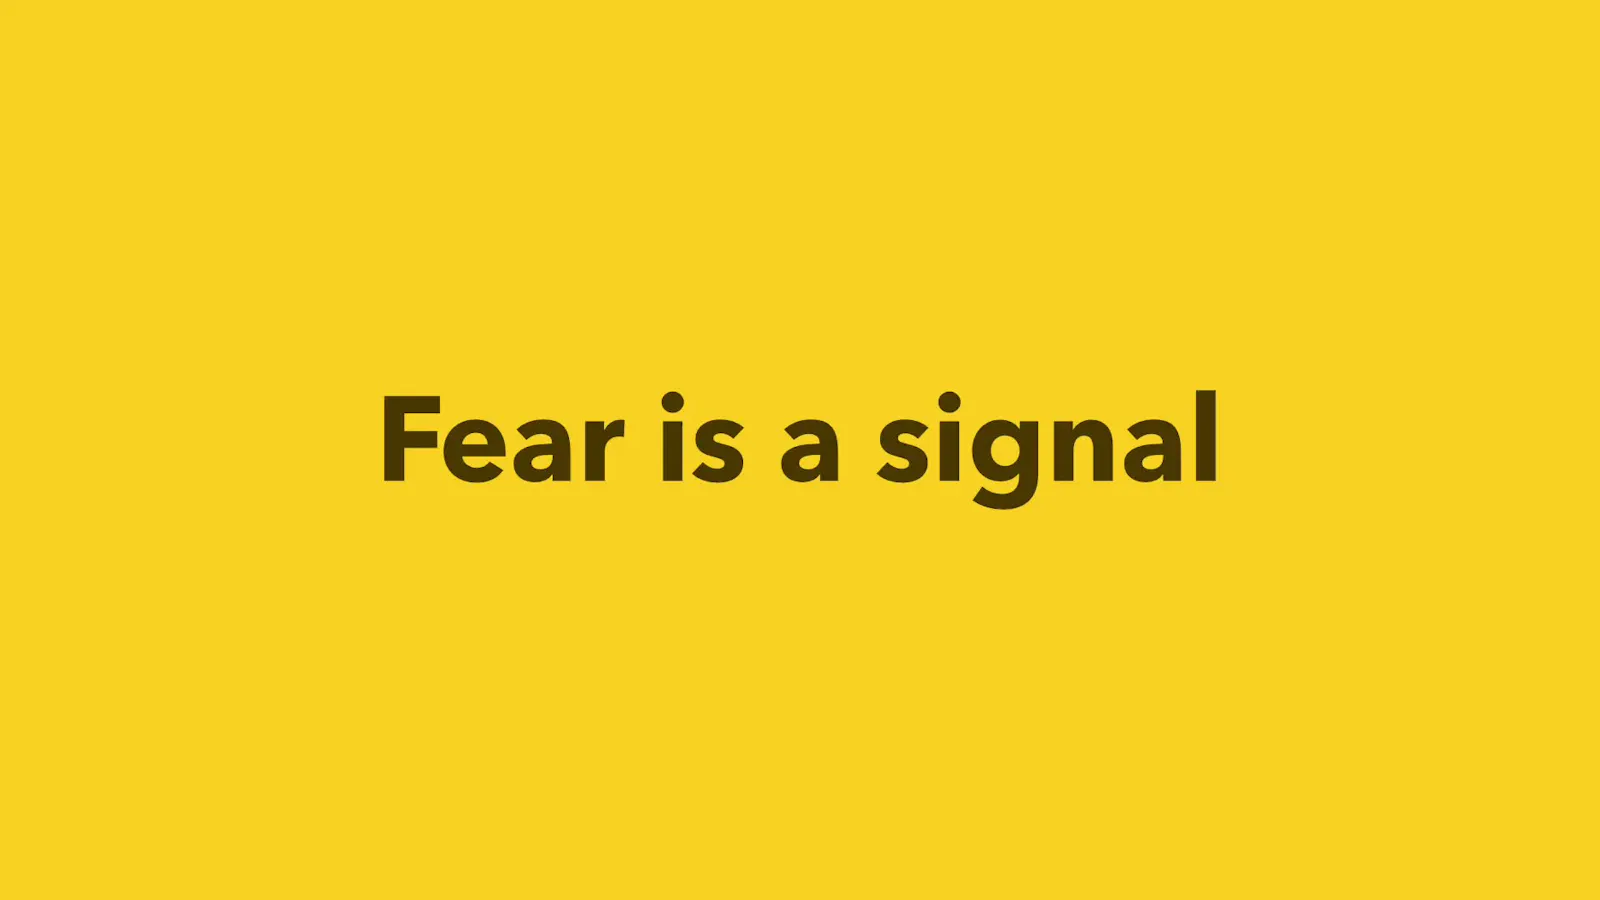 Fear is a signal